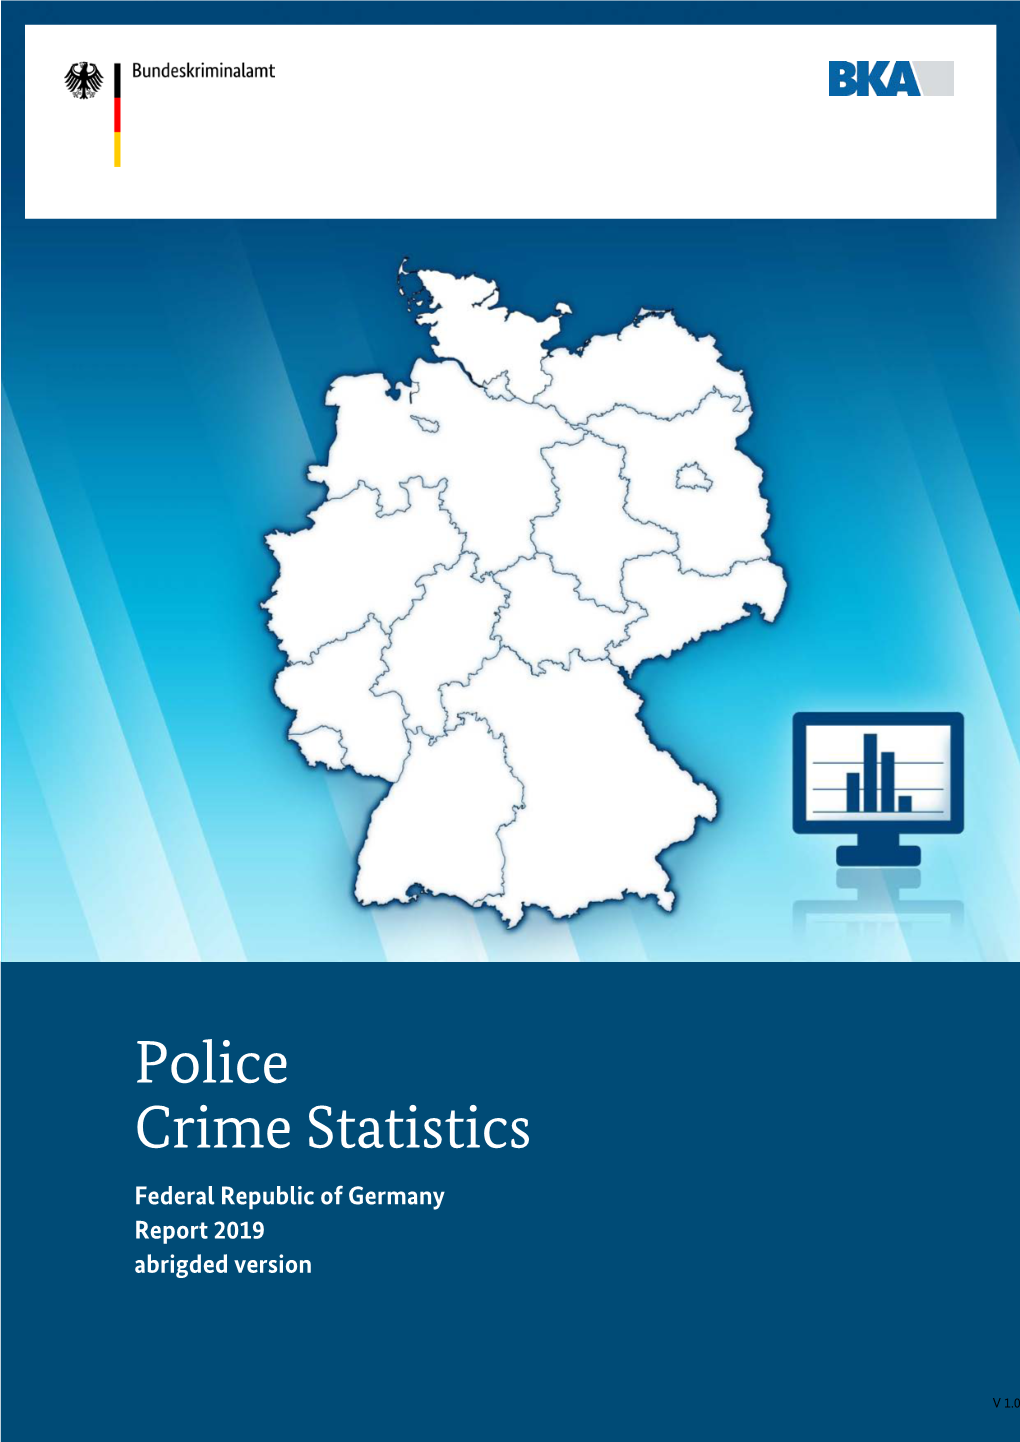 Police Crime Statistics Report 2019